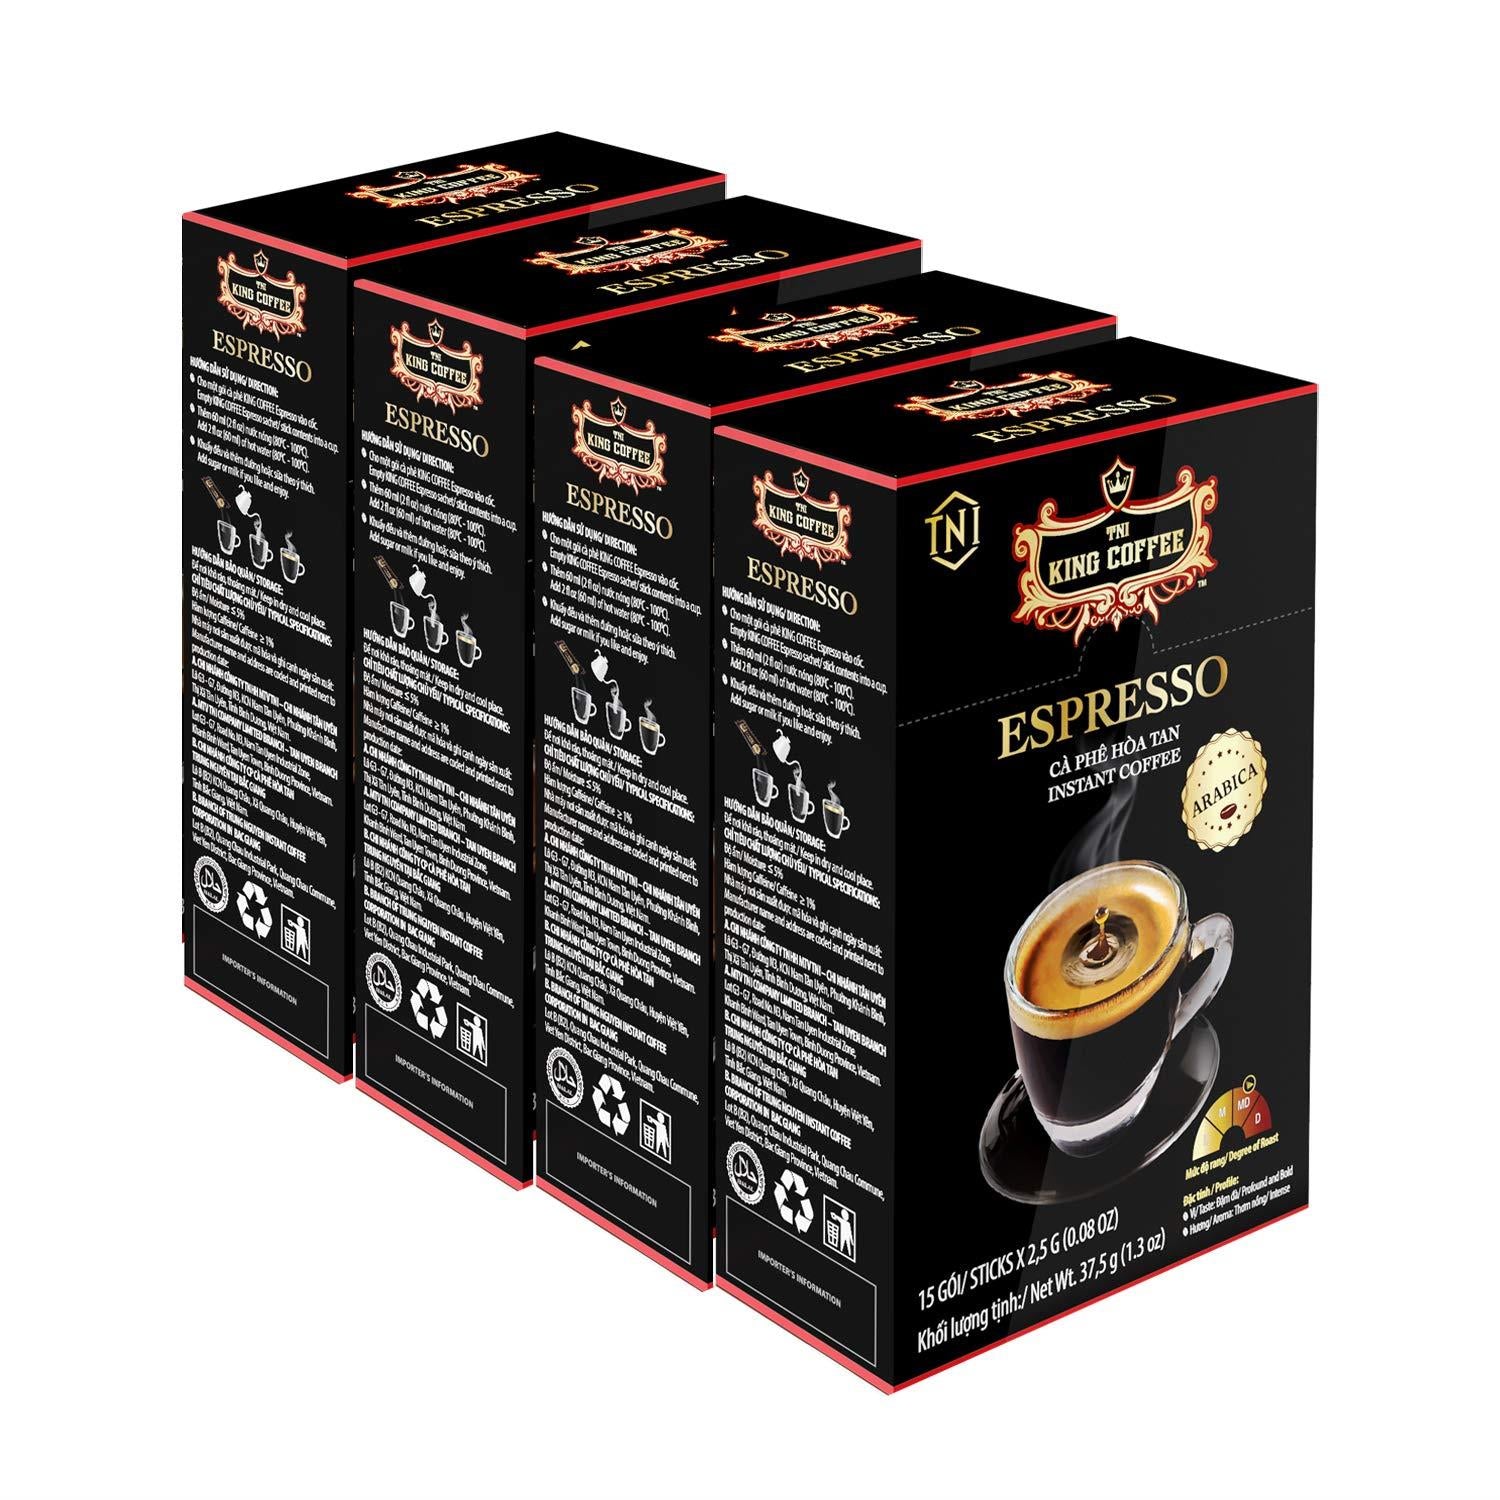 King Coffee Espresso Instant Coffee Vietnamese Coffee Arabica Instant Coffee Mix Medium Roast 15 sticks per box x 2.5g - Pack of 4